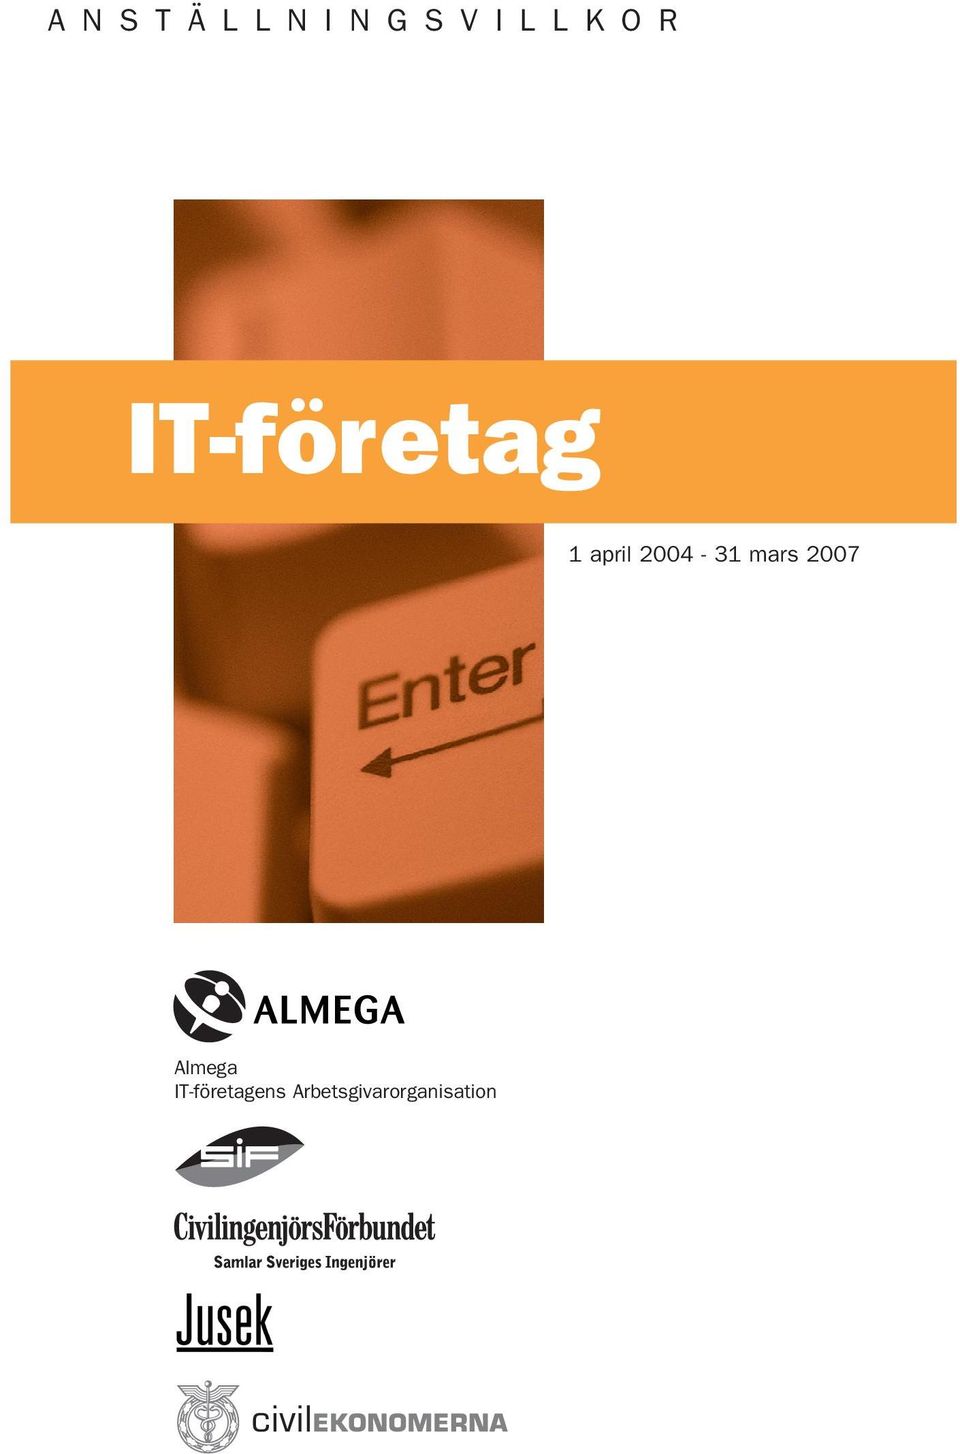 2004-31 mars 2007 Almega